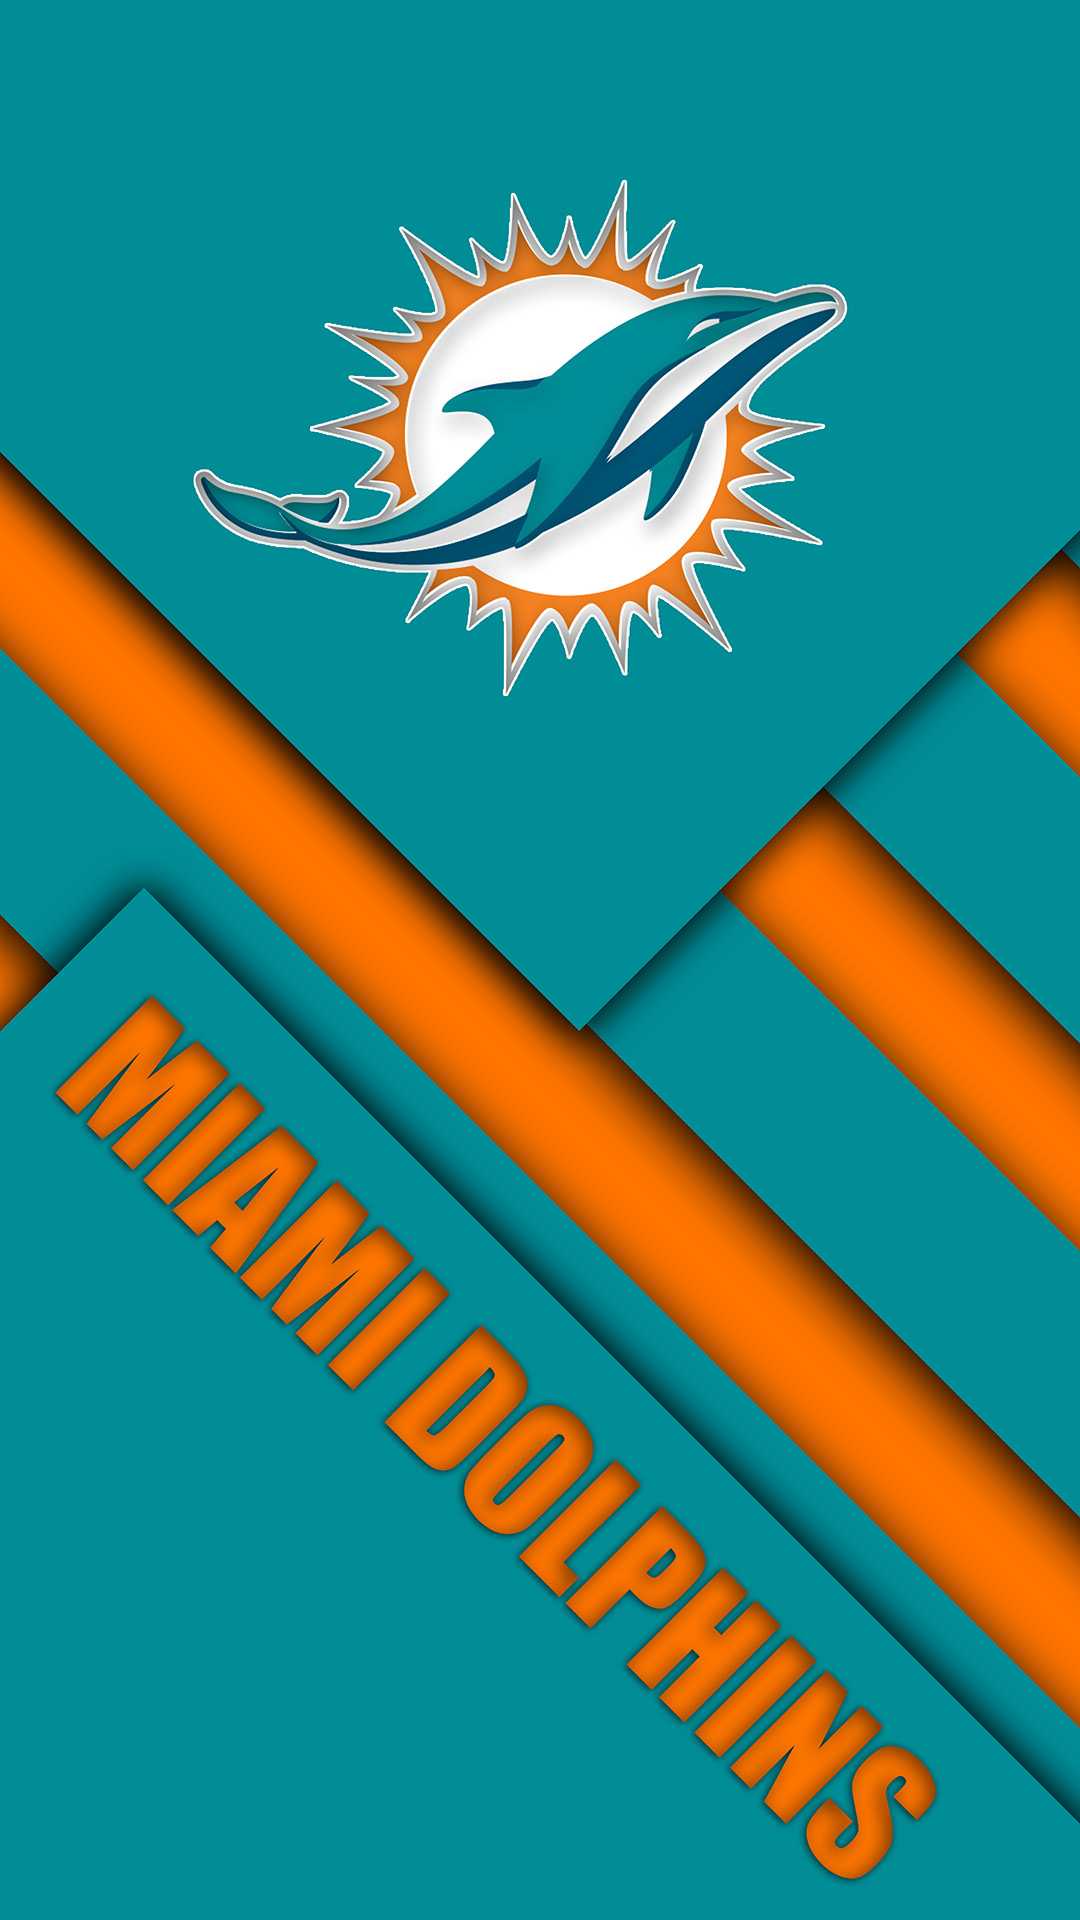 Miami Dolphins Wallpaper iXpap